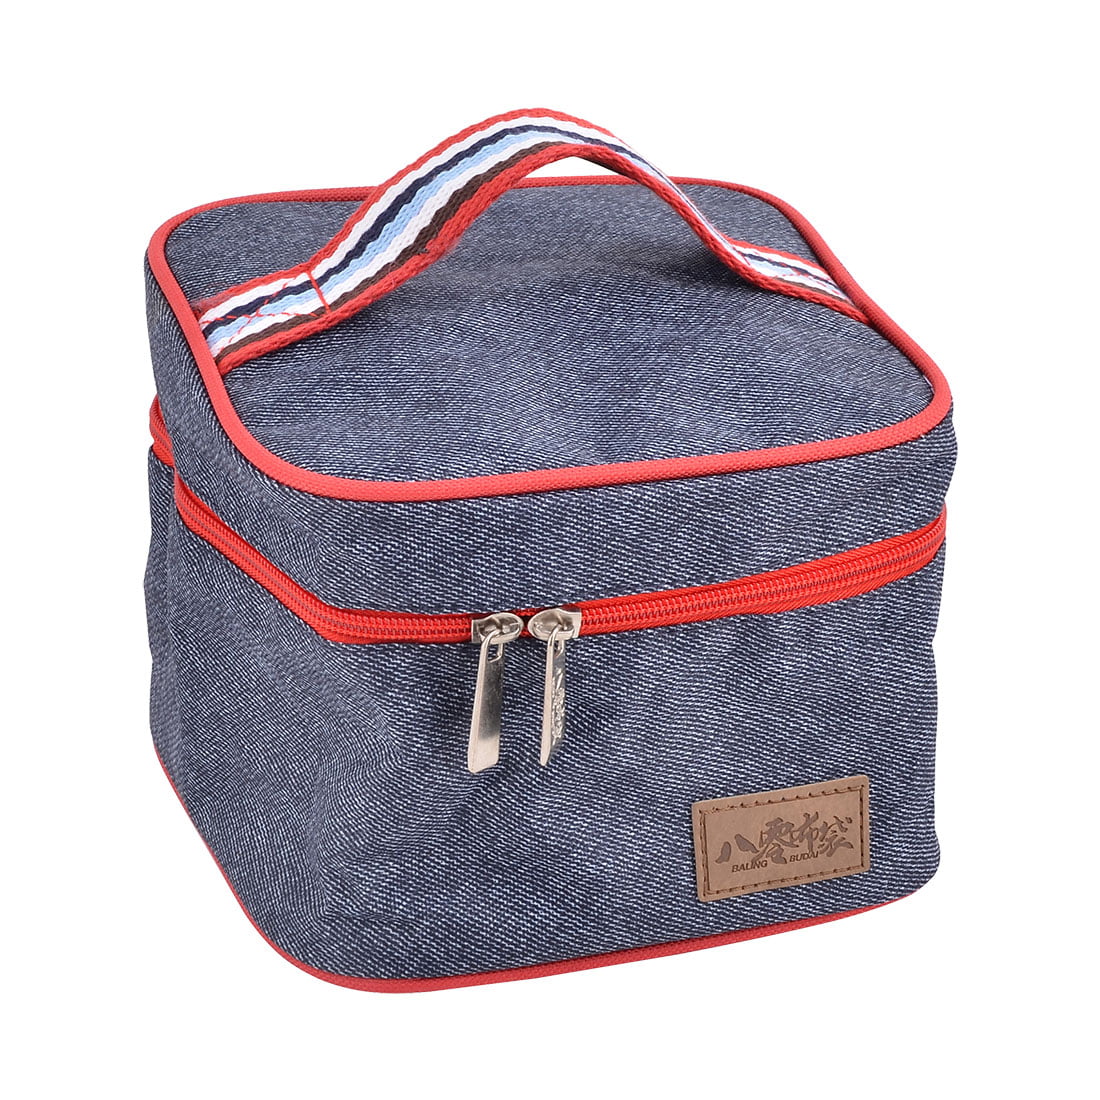 Home Zipper Closure Heat Retaining Tote Cooler Pouch Handbag Bag Navy Blue Red - 0